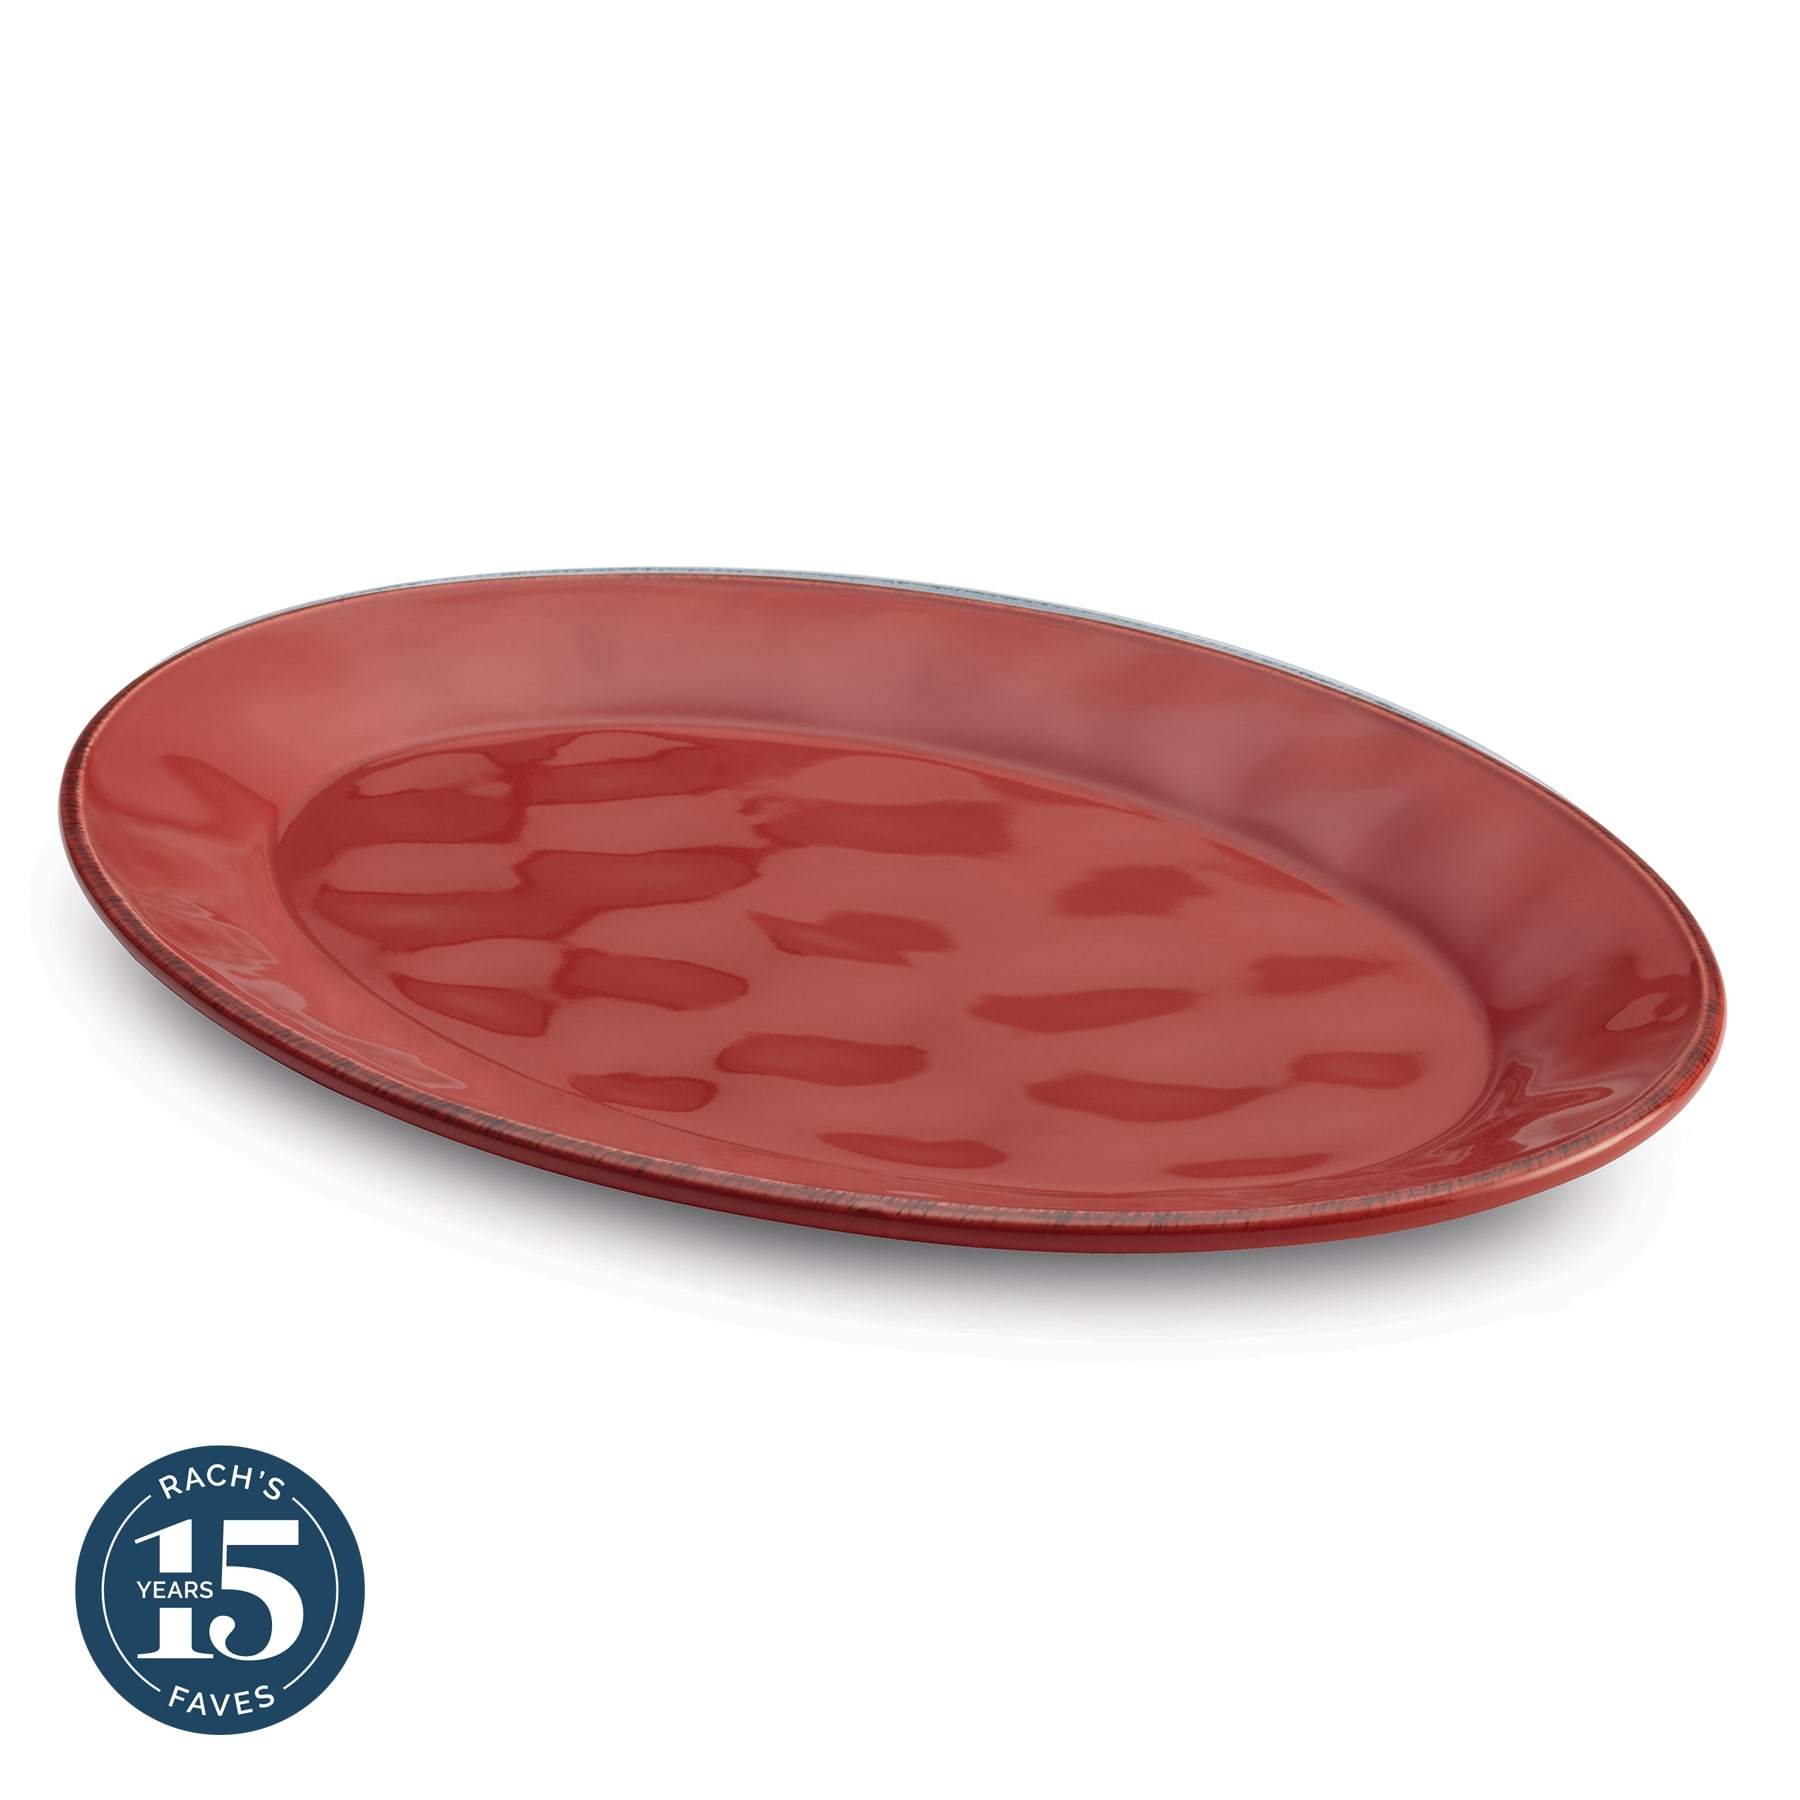 rachael ray oval platter